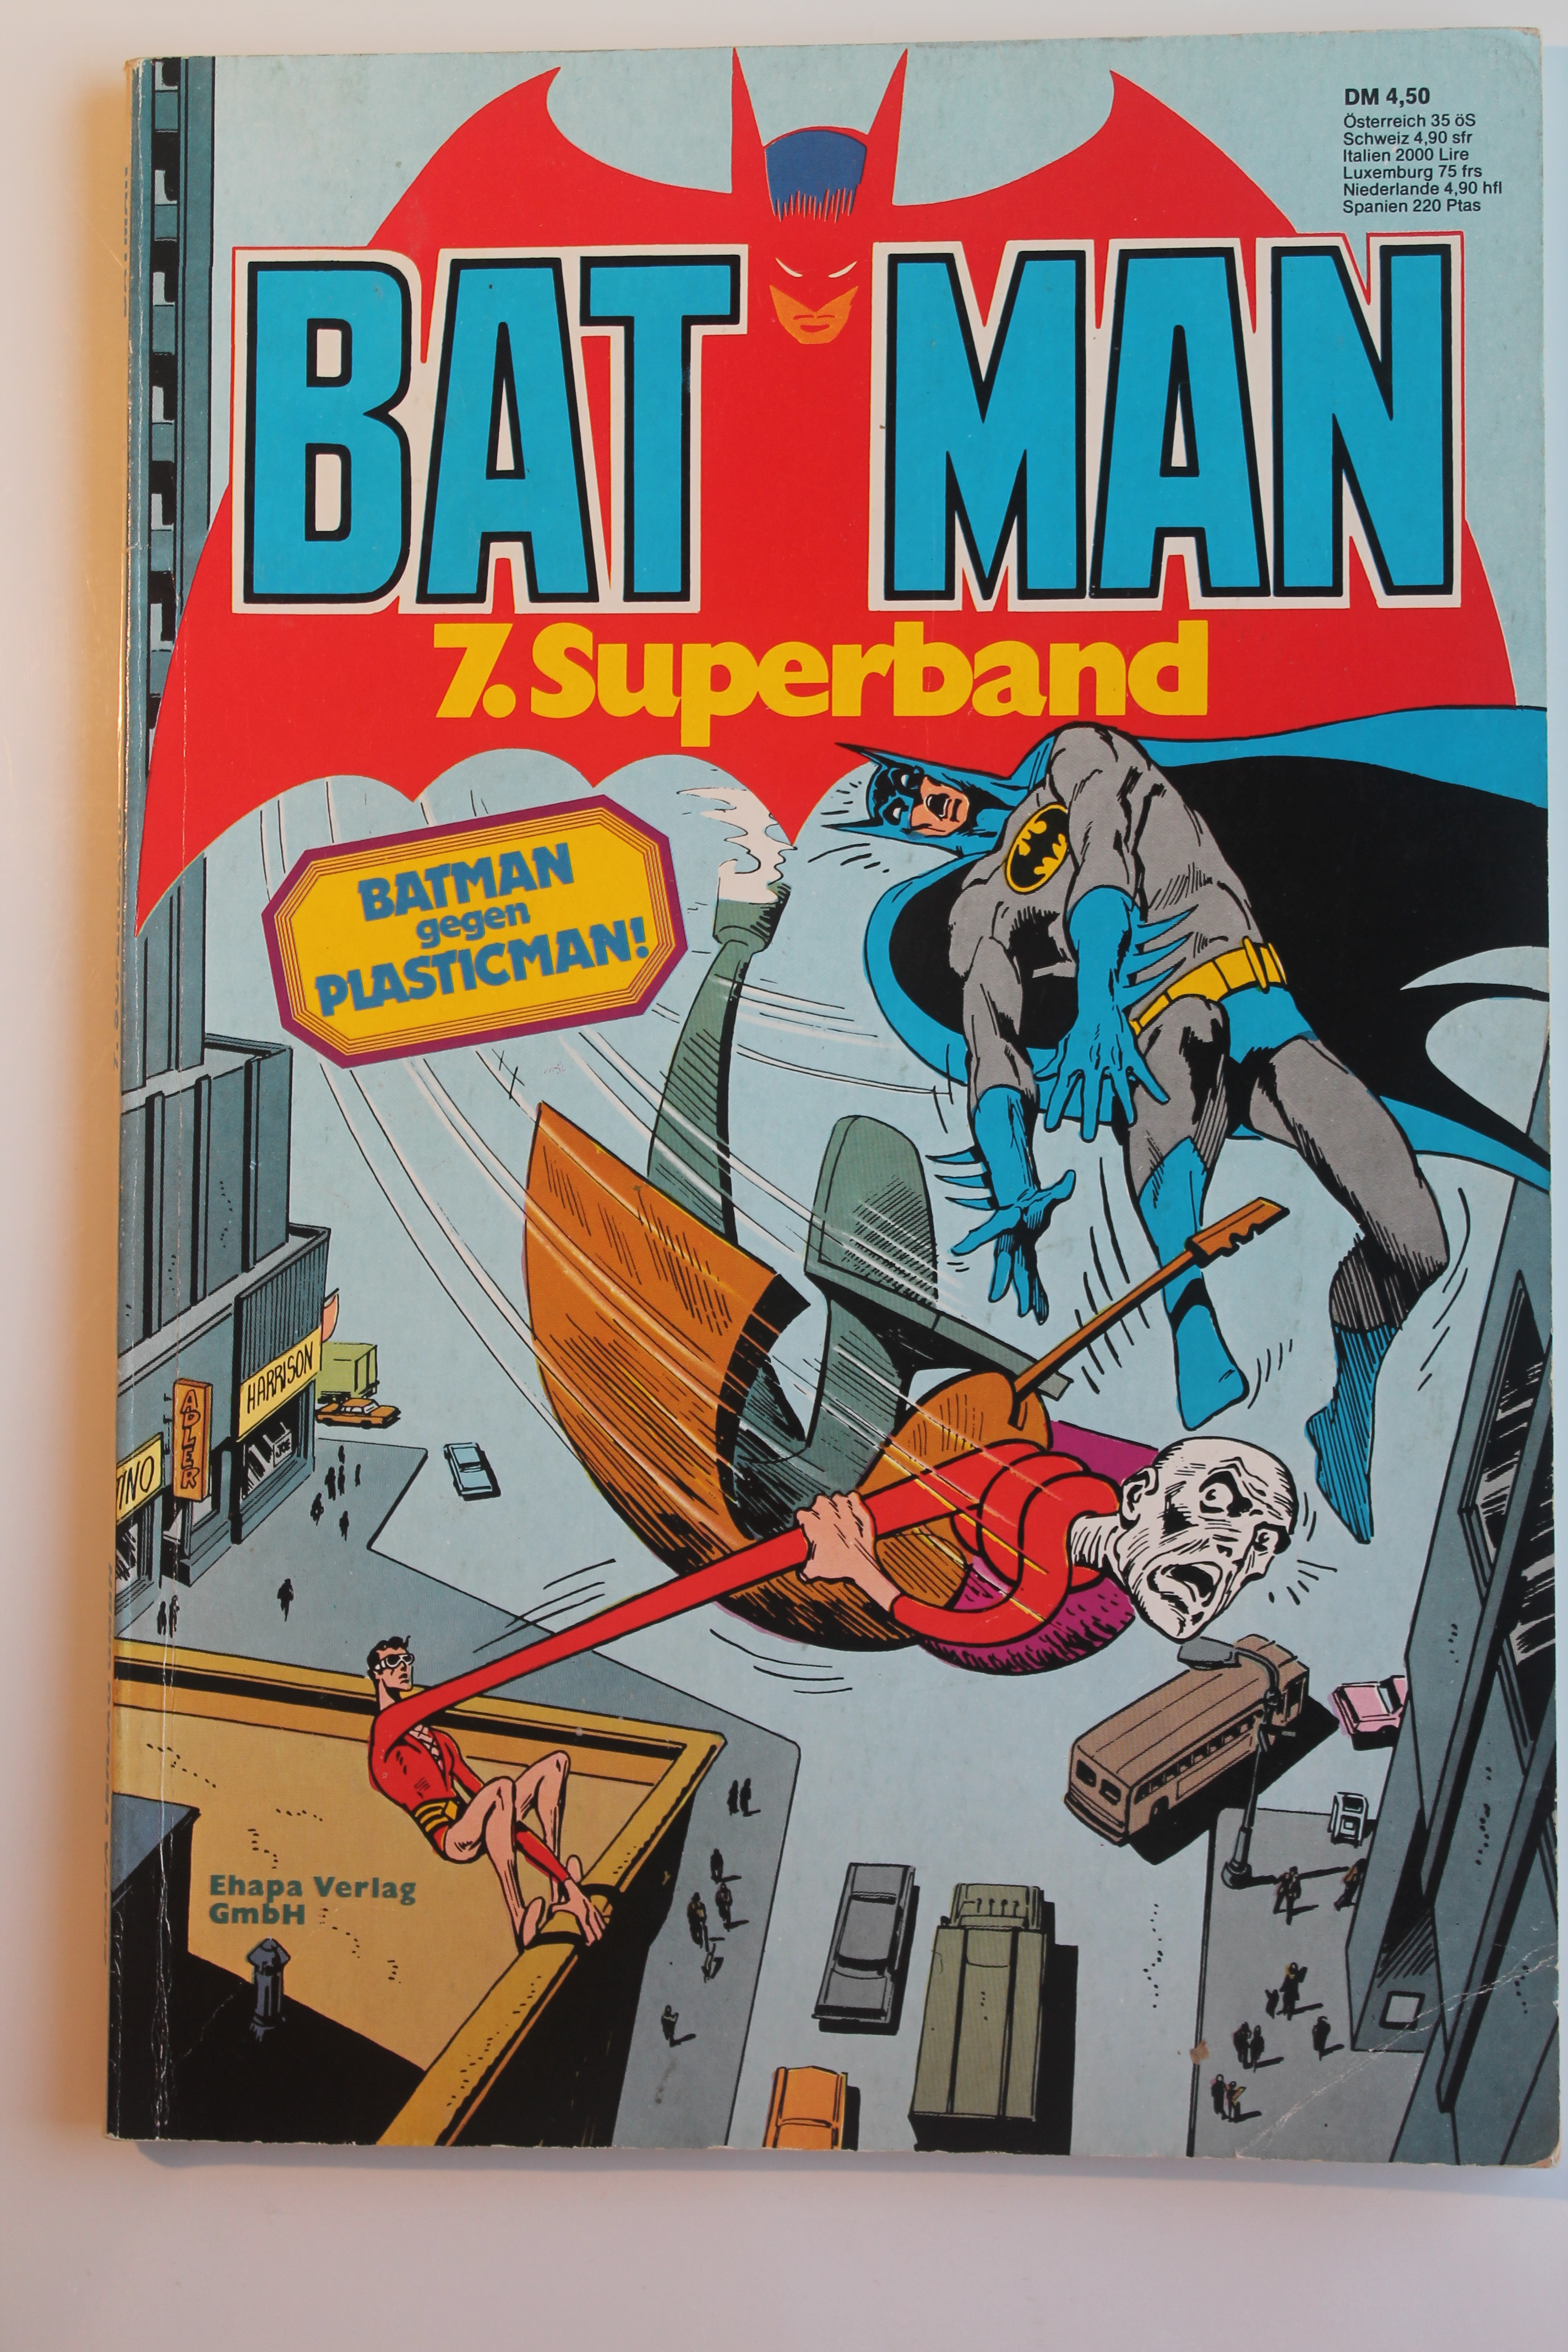 Batman superband 7